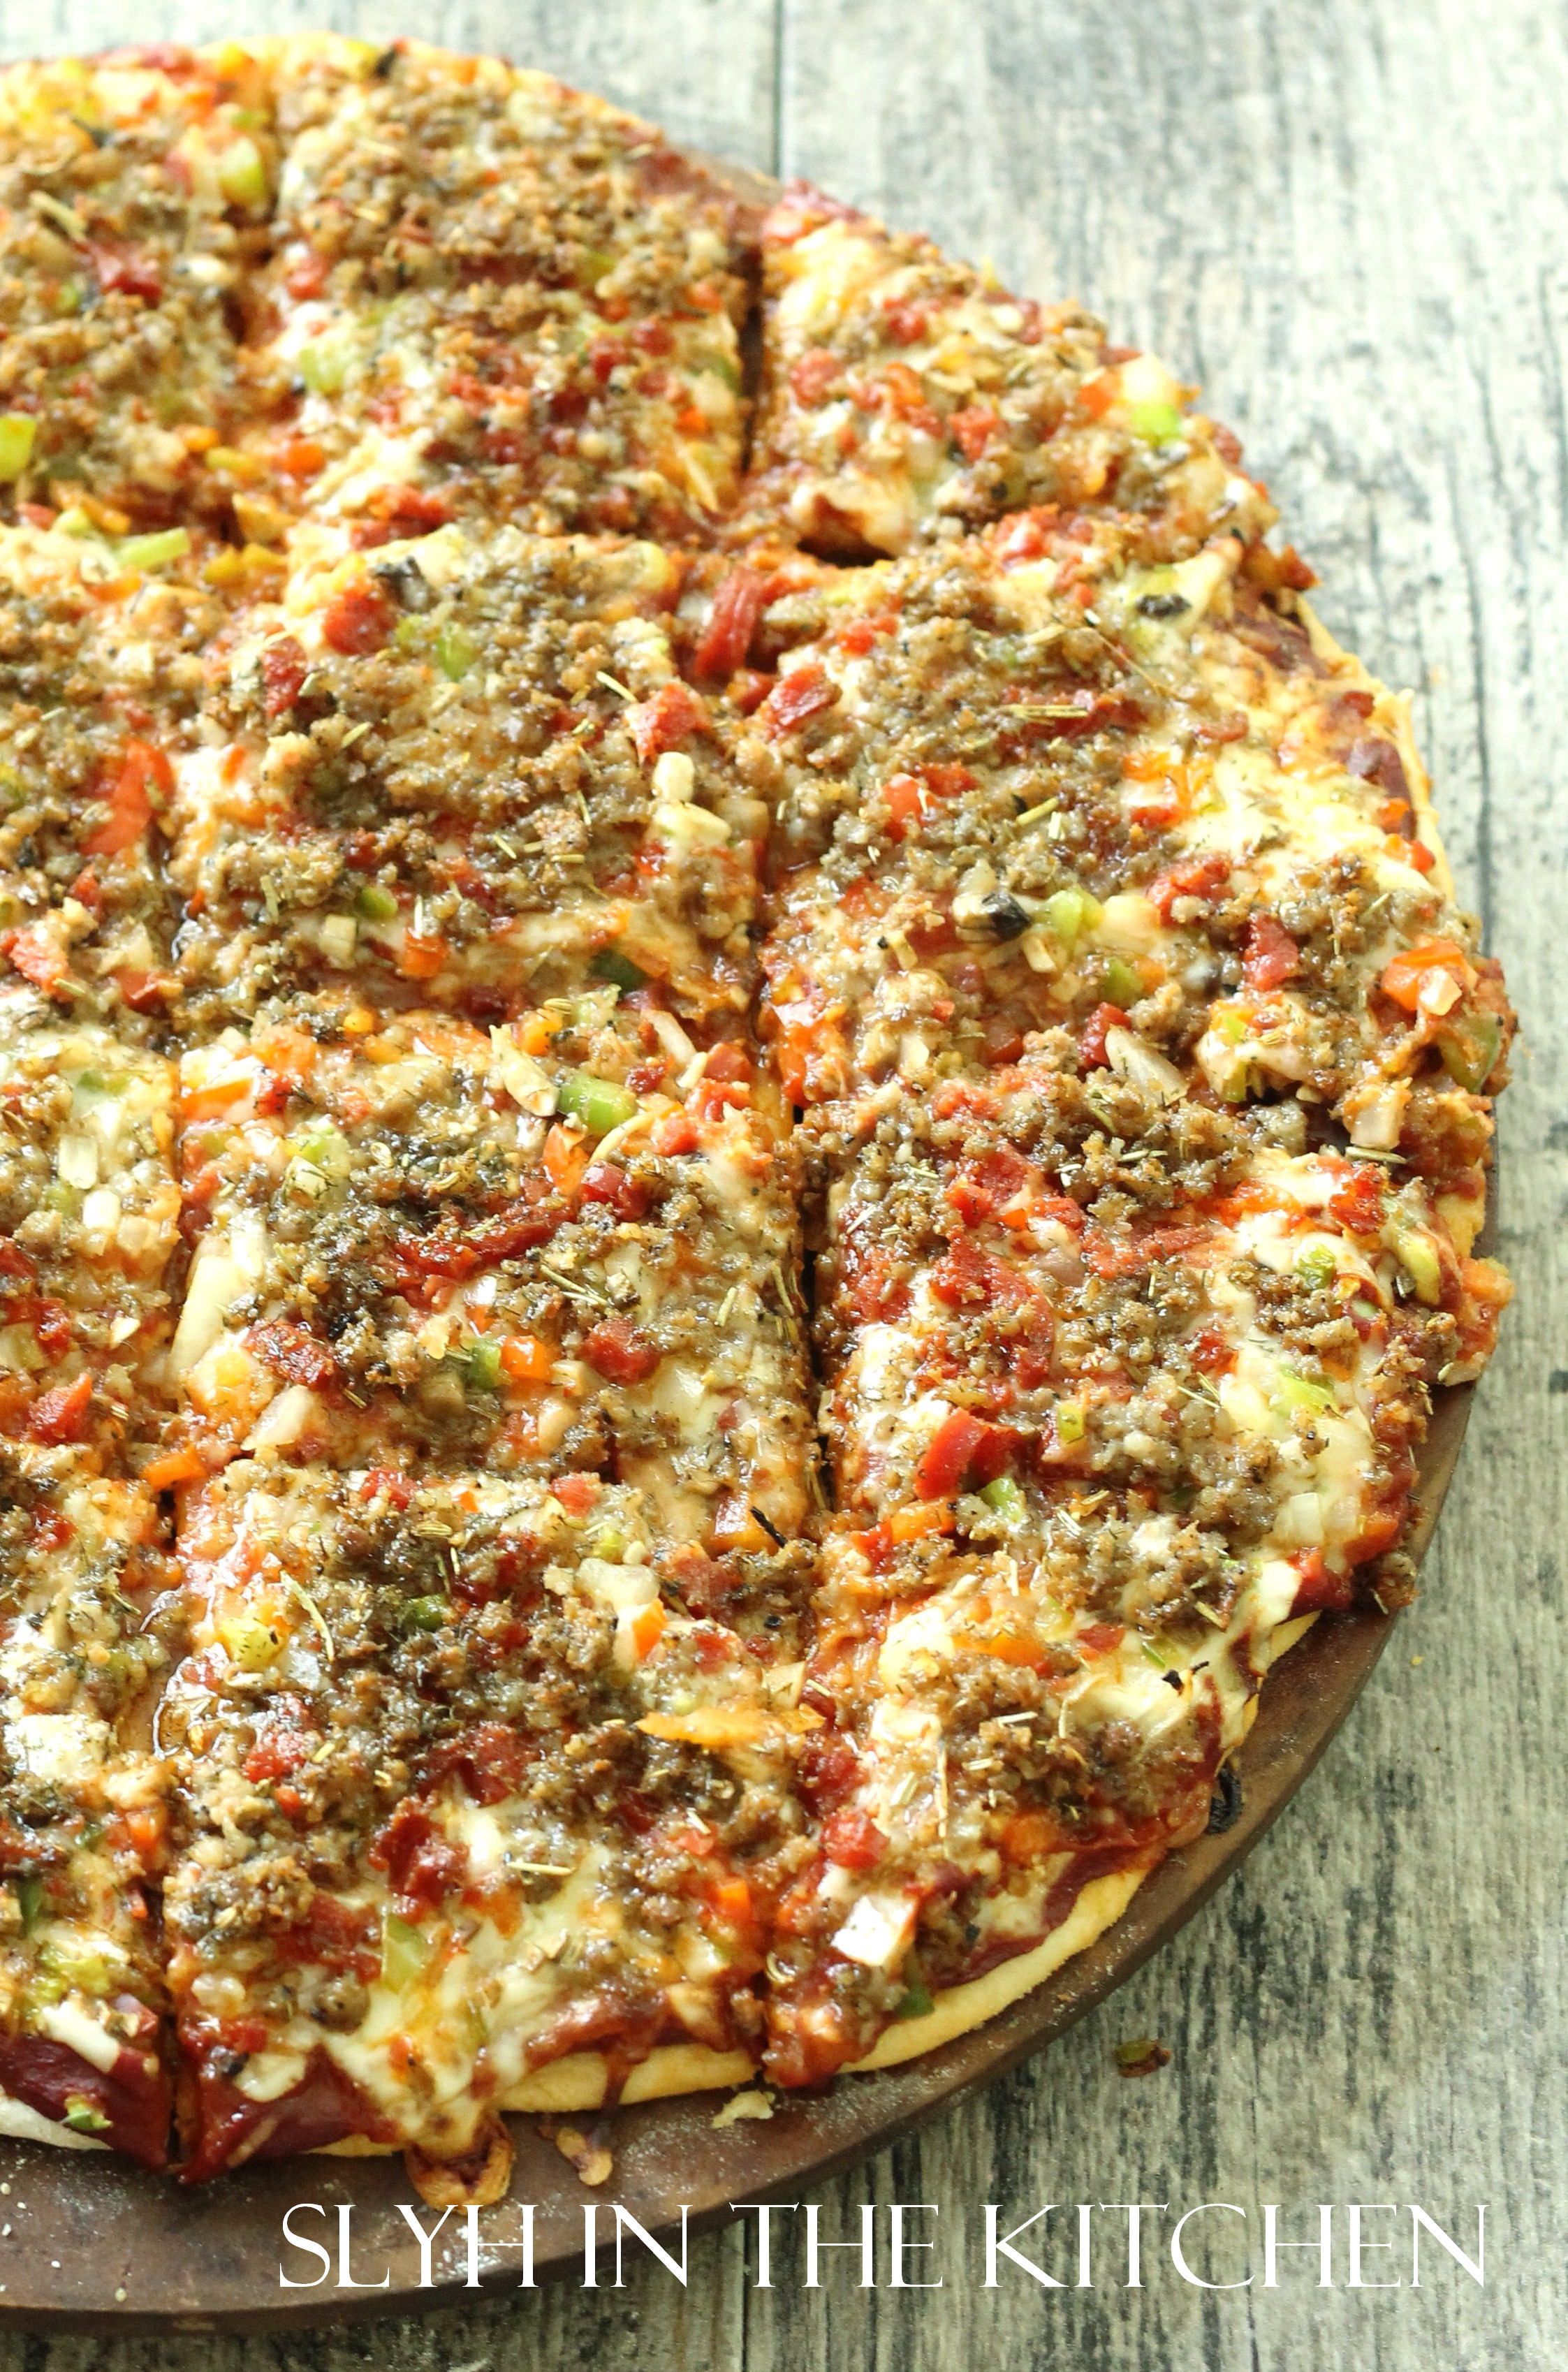 http://www.slyhkitchen.com/wp-content/uploads/2015/07/Royal-Thin-Crust-Pizza.jpg